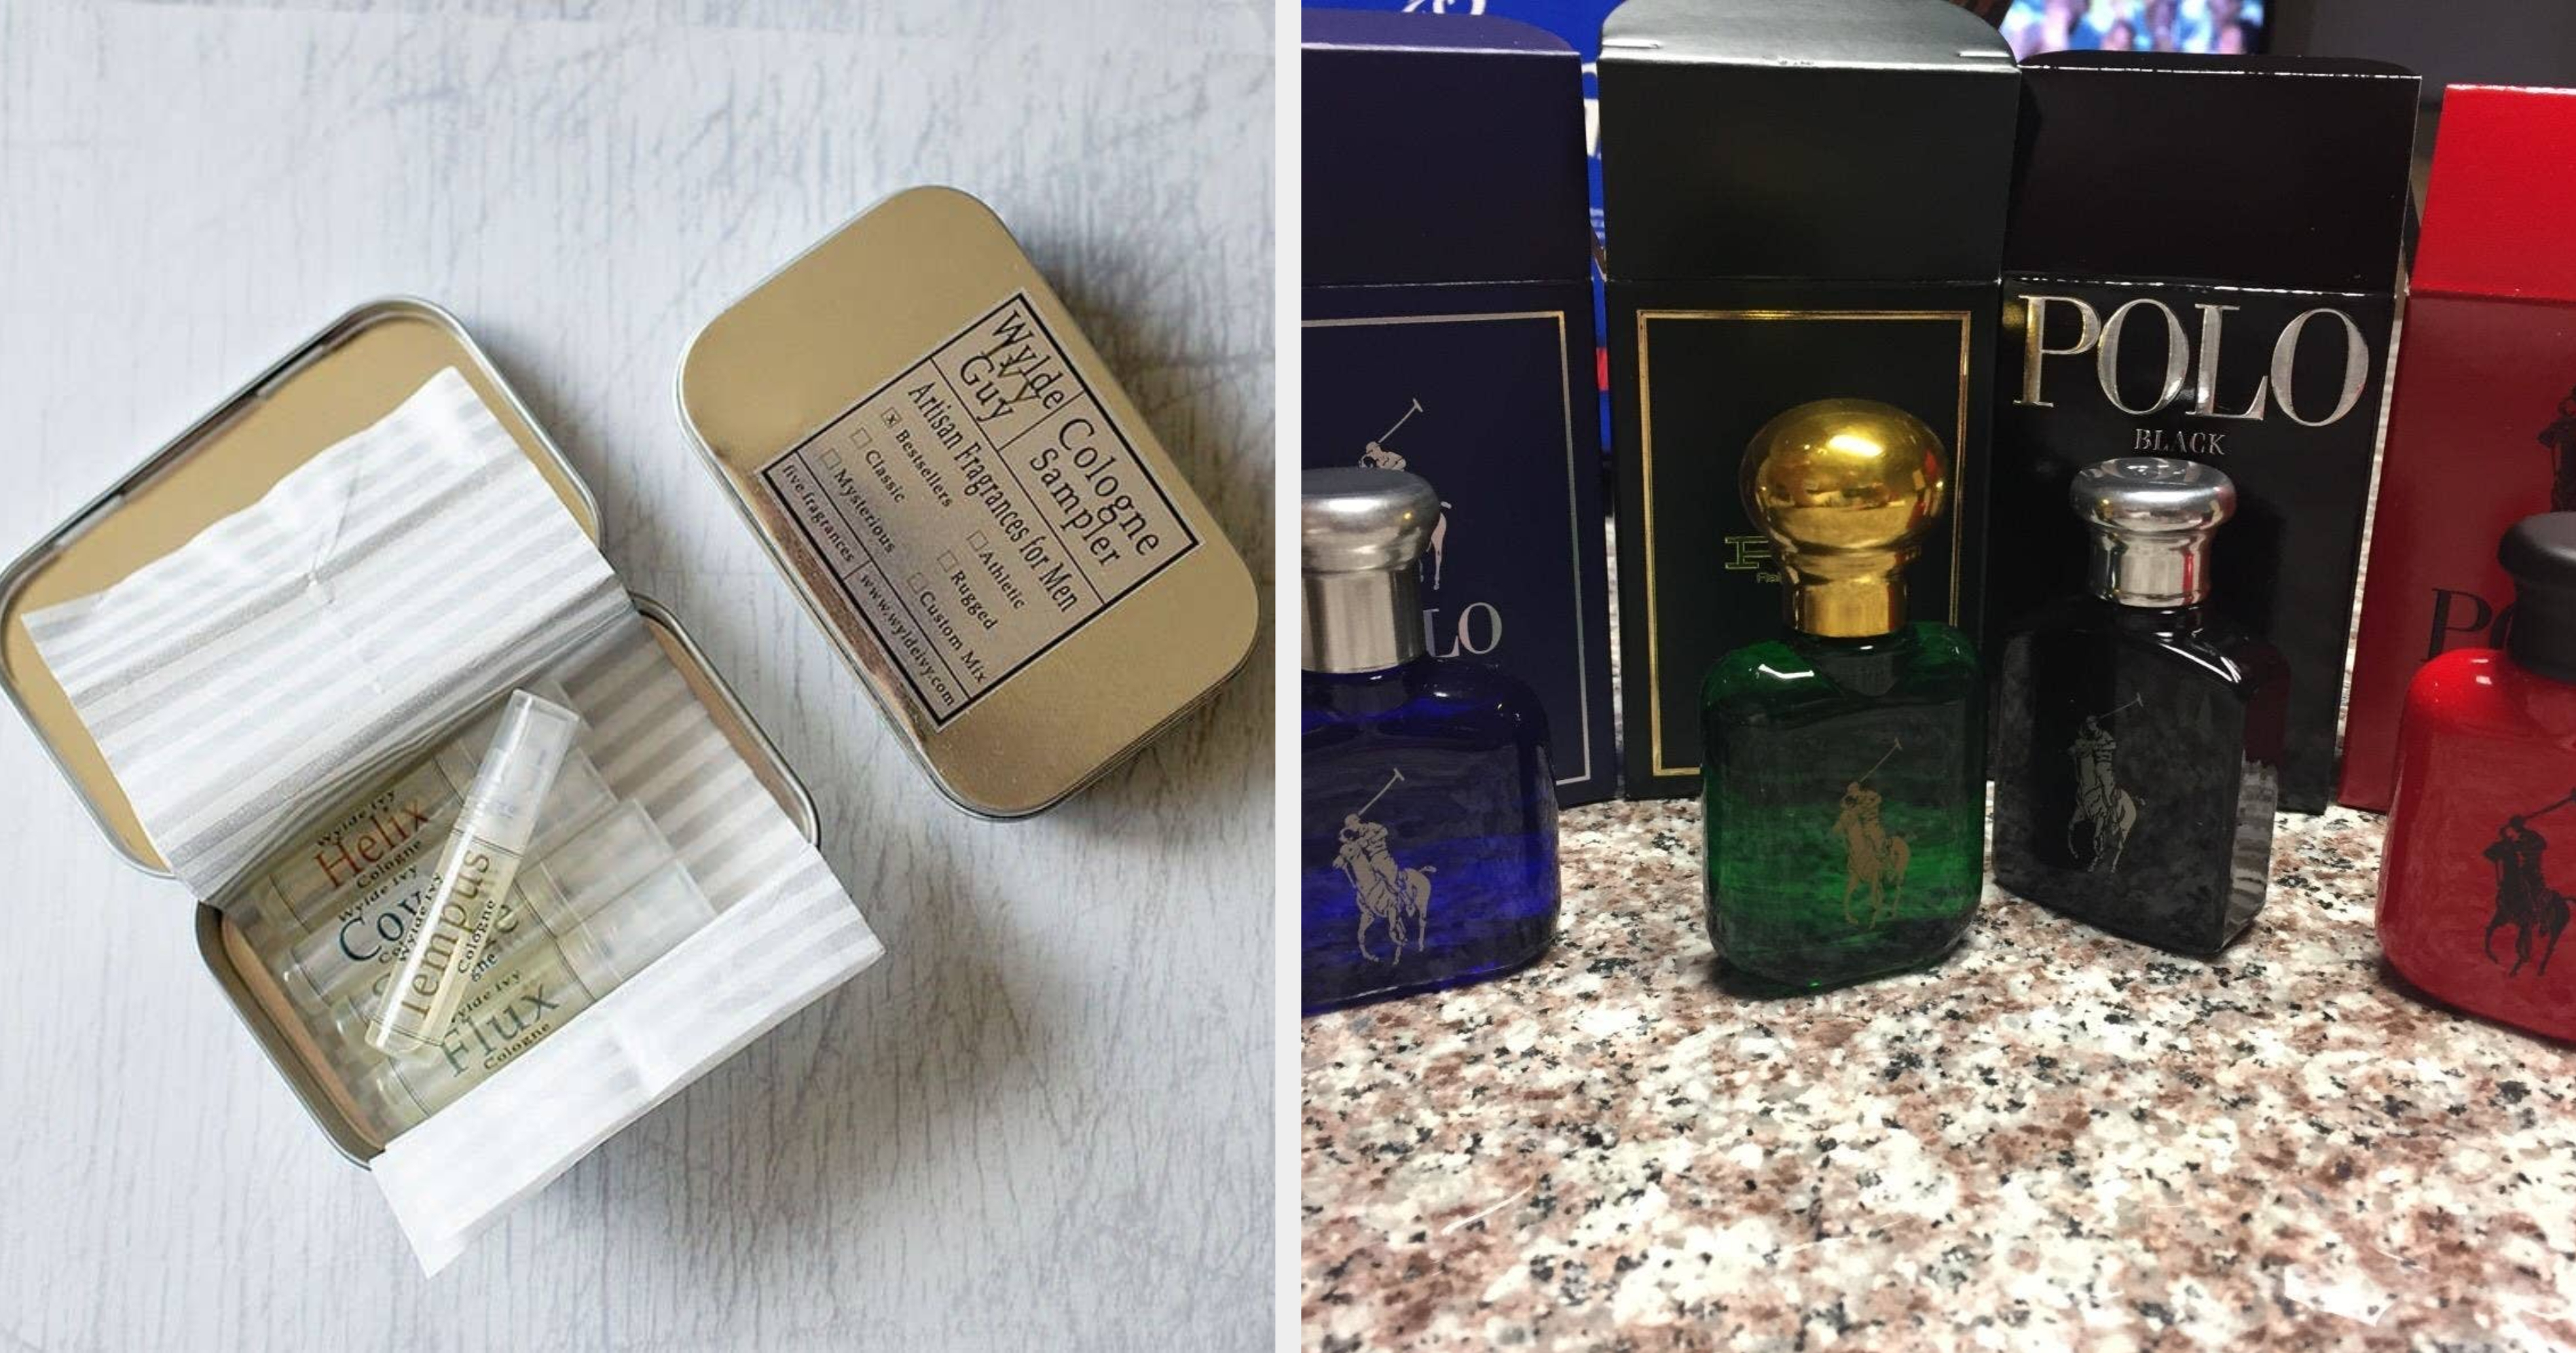 Ralph Lauren 2-Pc. Romance Eau de Parfum Jumbo Gift Set, Created for Macy's  - Macy's